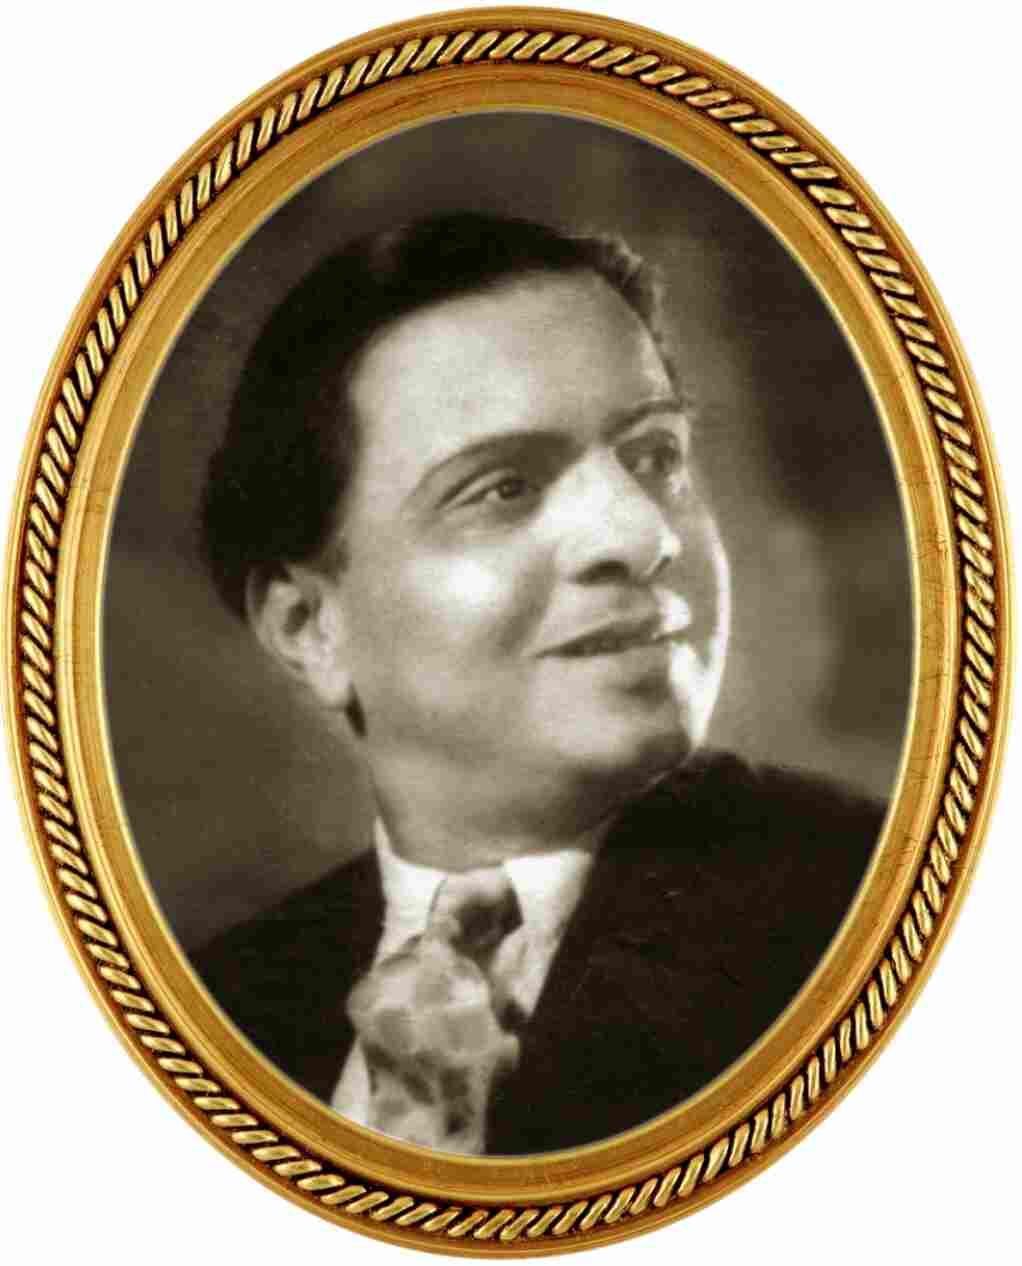 Remembering Jaishankar Danve the Legendary Actor of Marathi Cinema